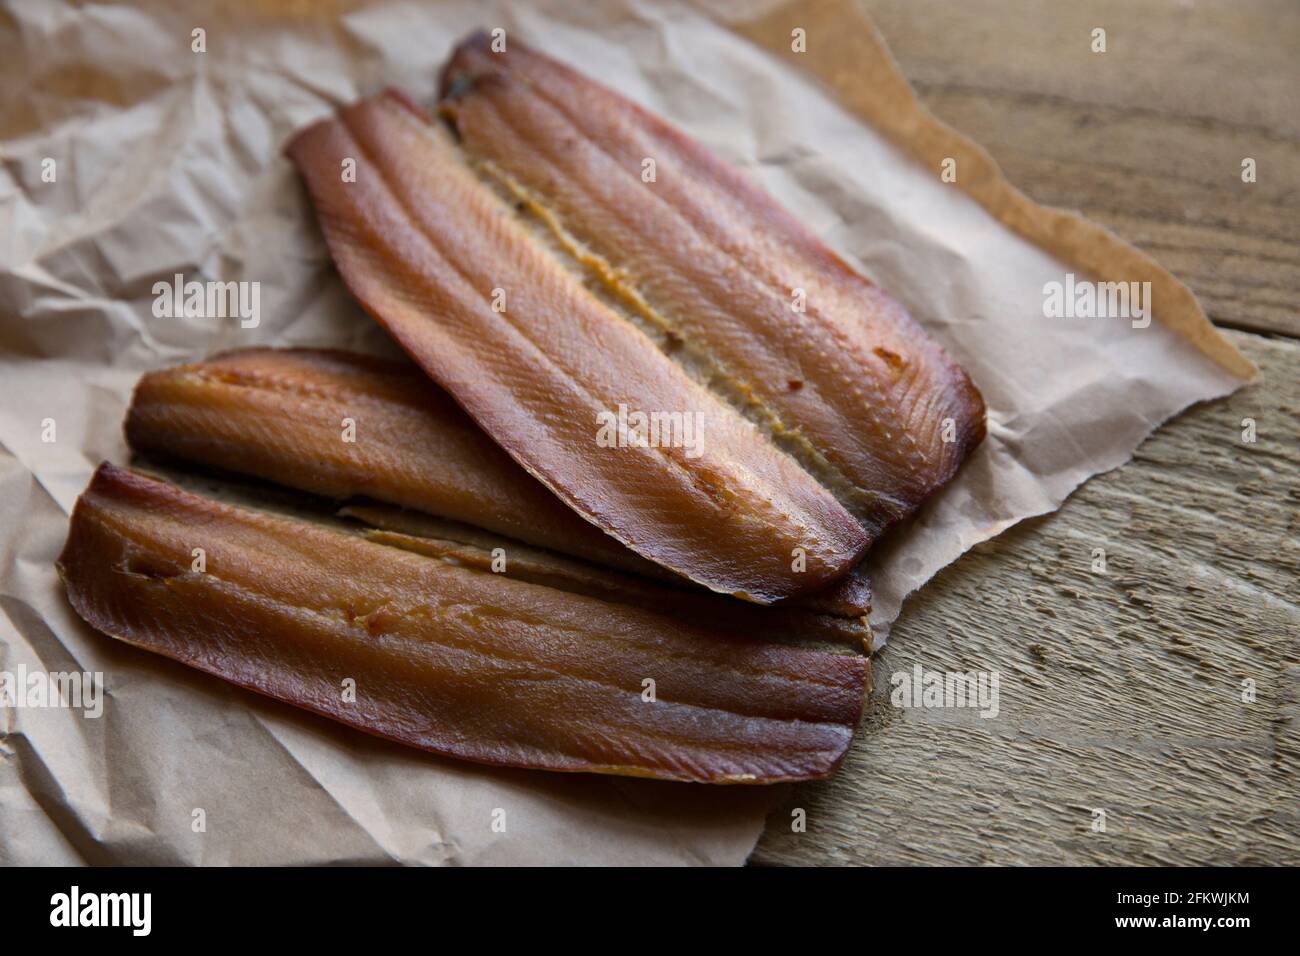 Cimini per kipper Cricer affumicati presentati su sfondo di legno. I peperoni sono aringhe affumicate e sono ricchi di oli di pesce. Inghilterra GB Foto Stock